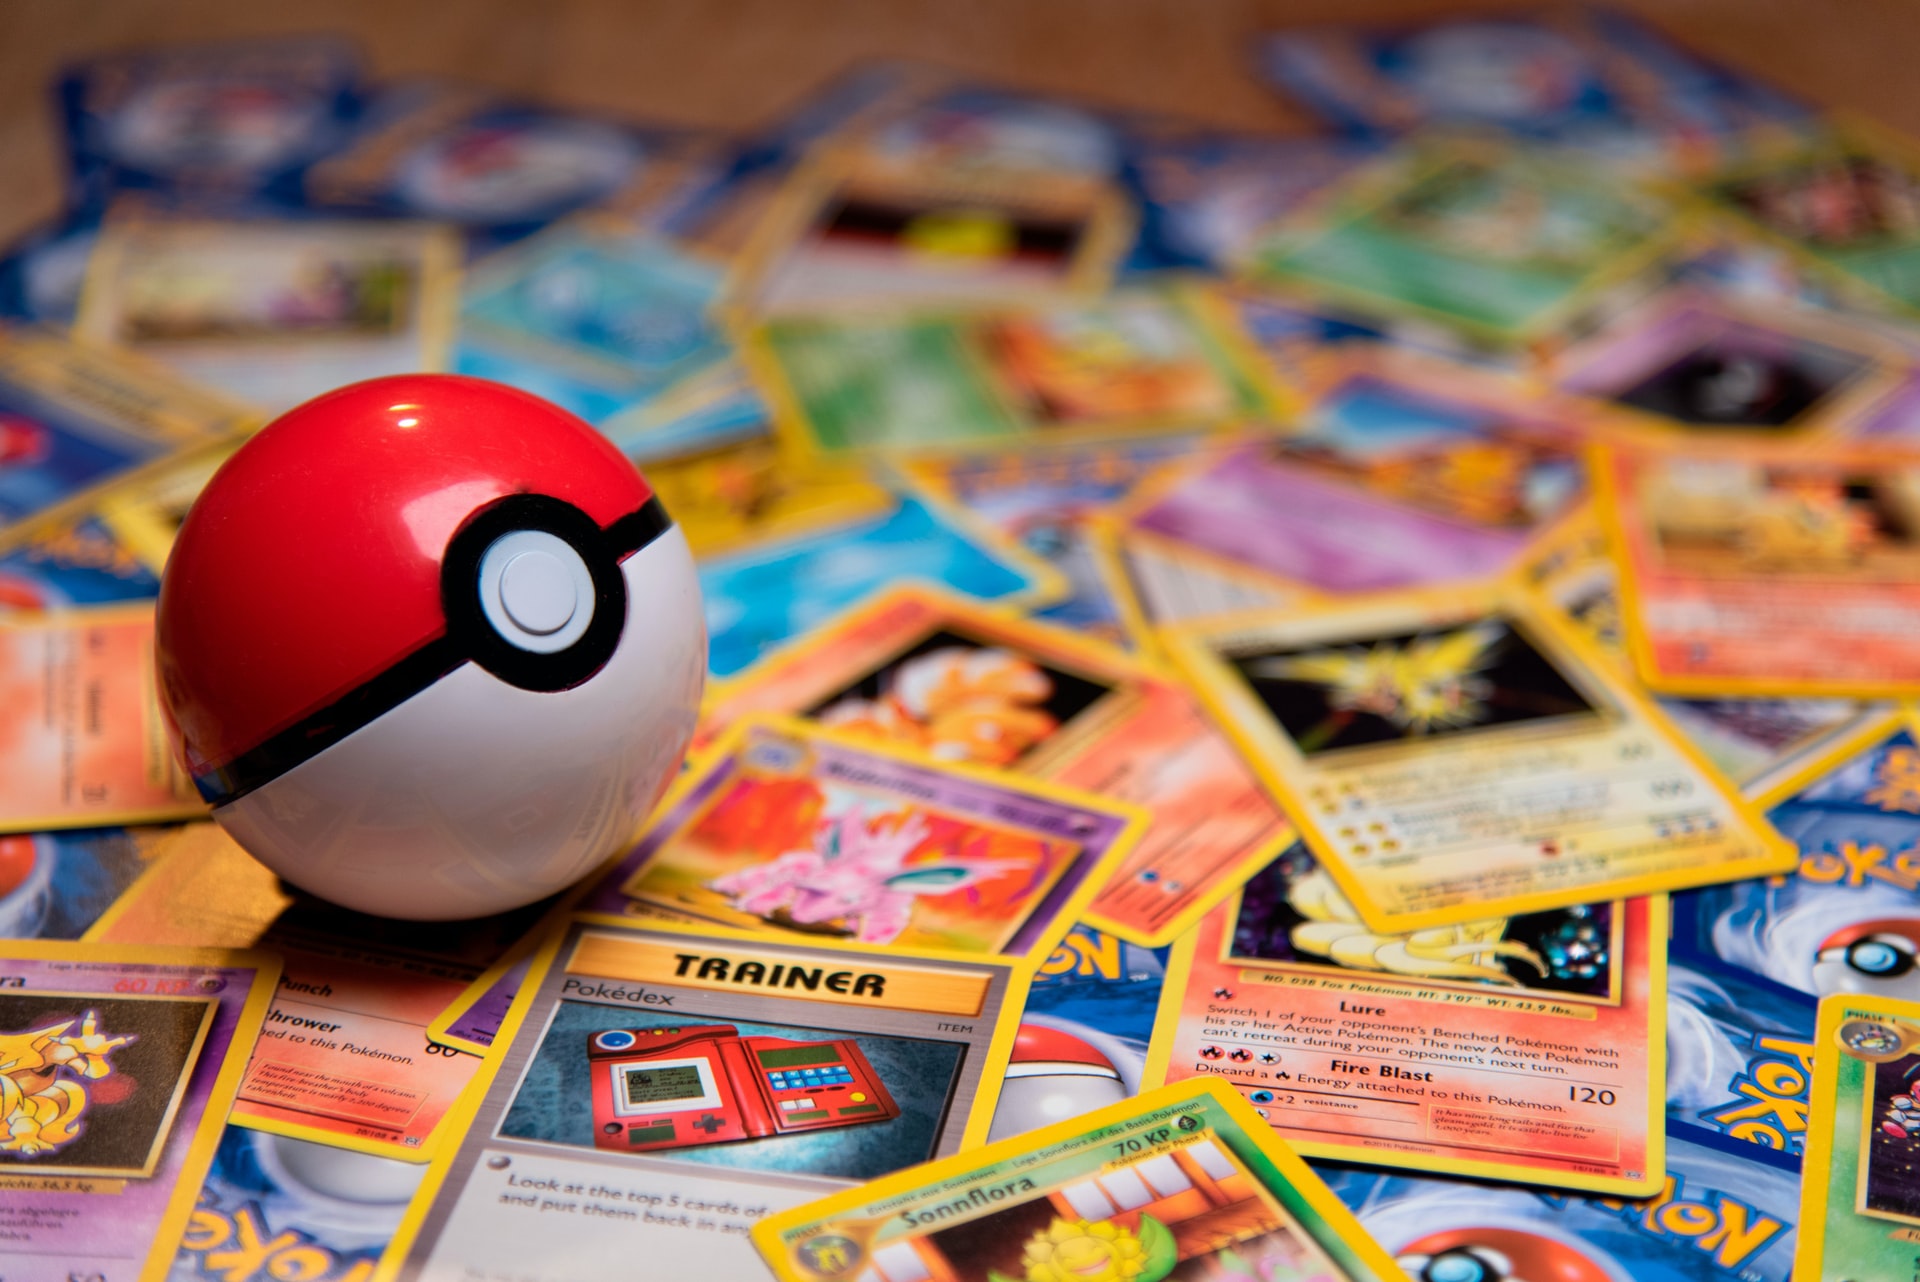 Pokéball with Pokémon trading cards